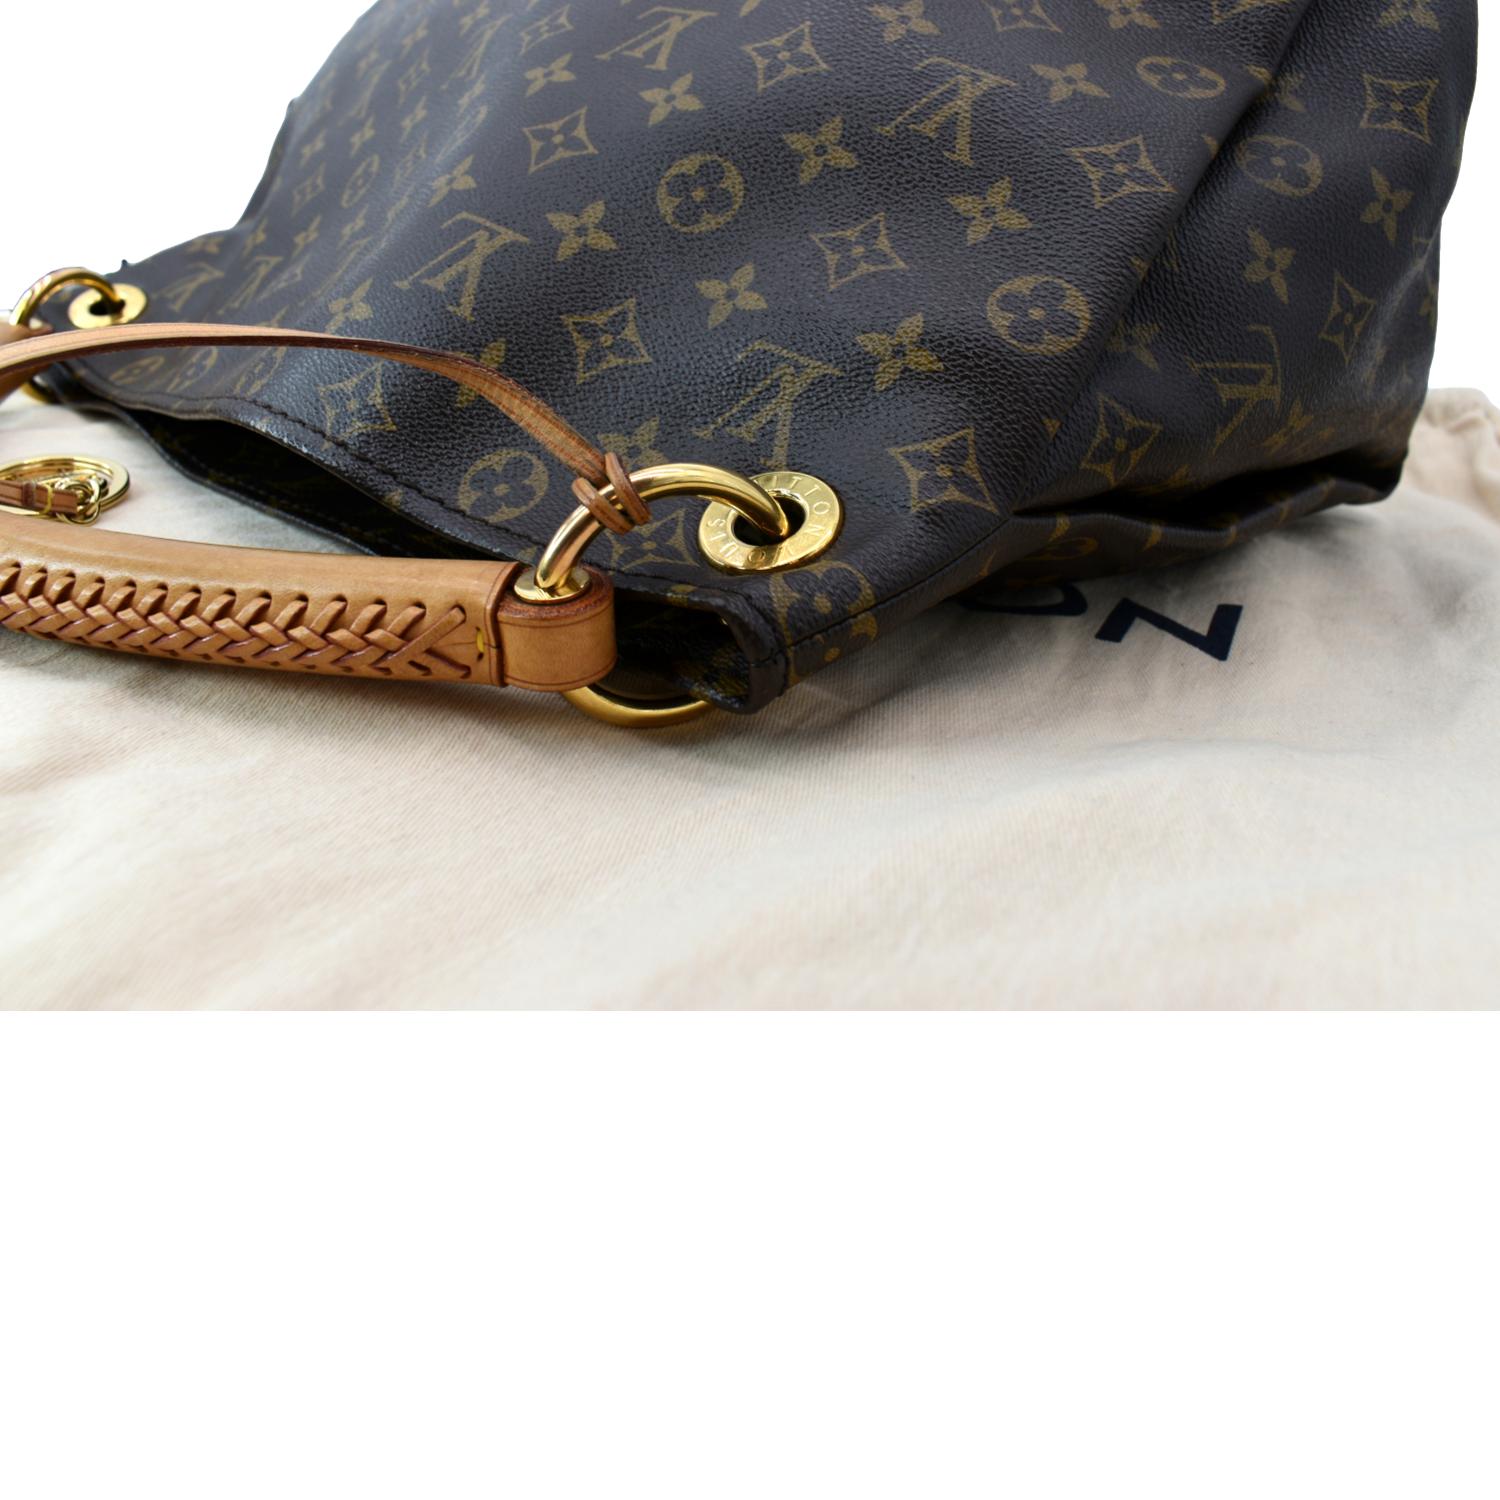 Louis Vuitton Artsy Monogram Mm Satchel Brown and Tan Canvas Hobo Bag